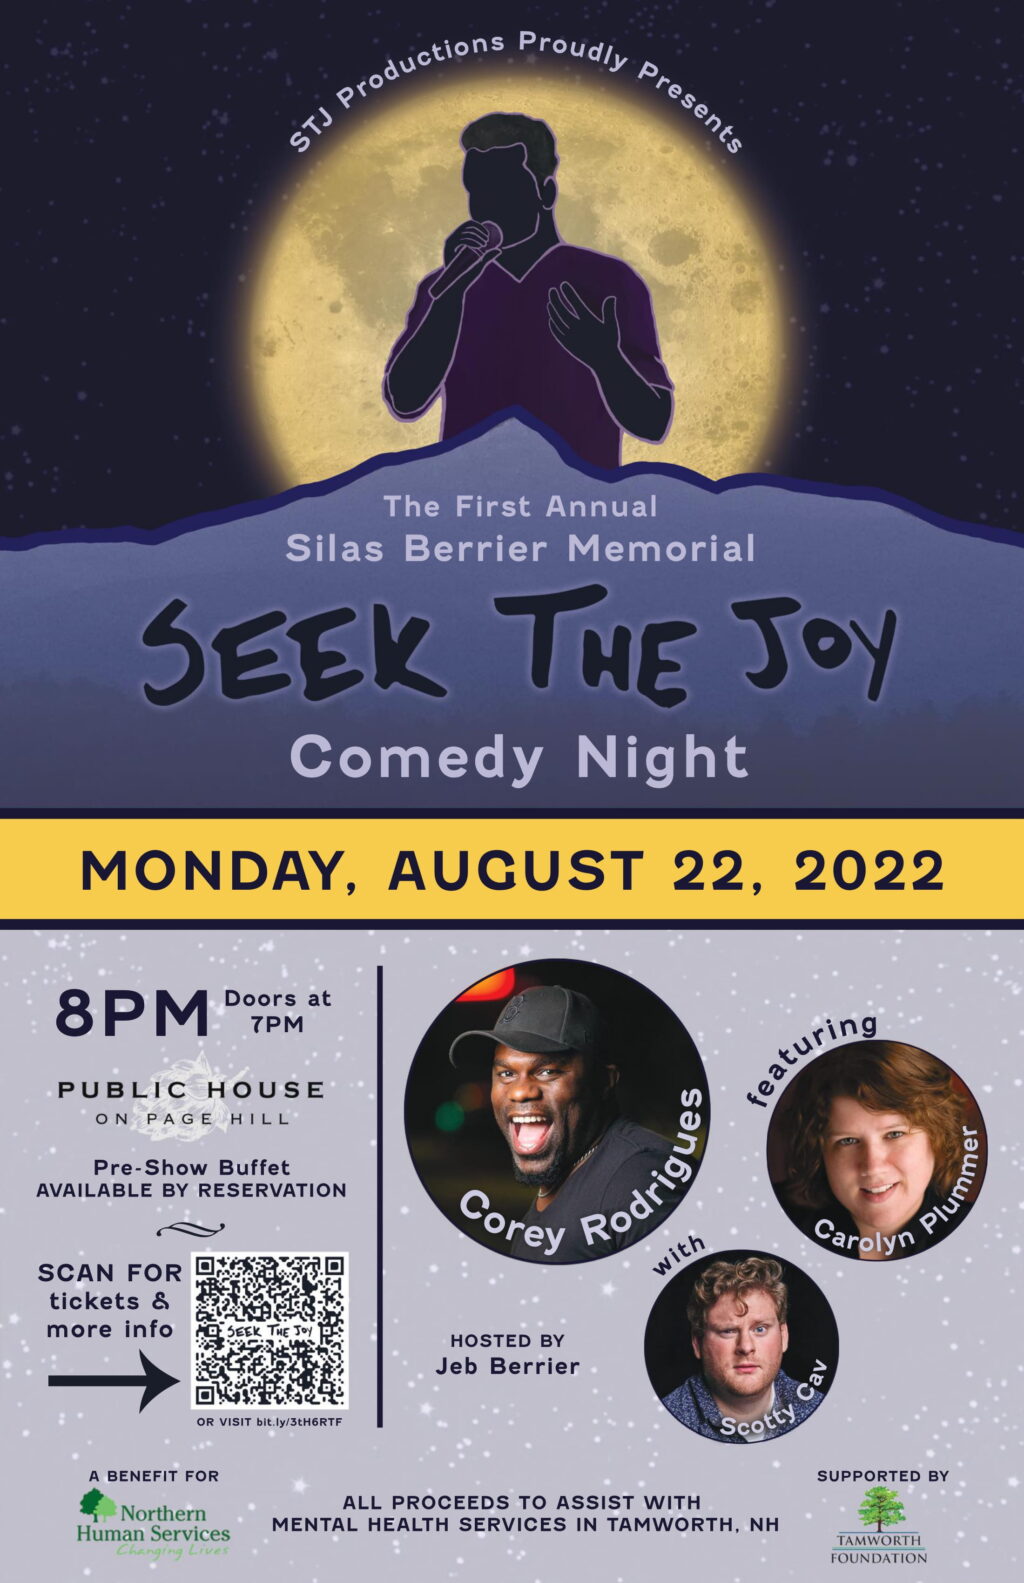 Seek the Joy Comedy Night Fundraiser August 22